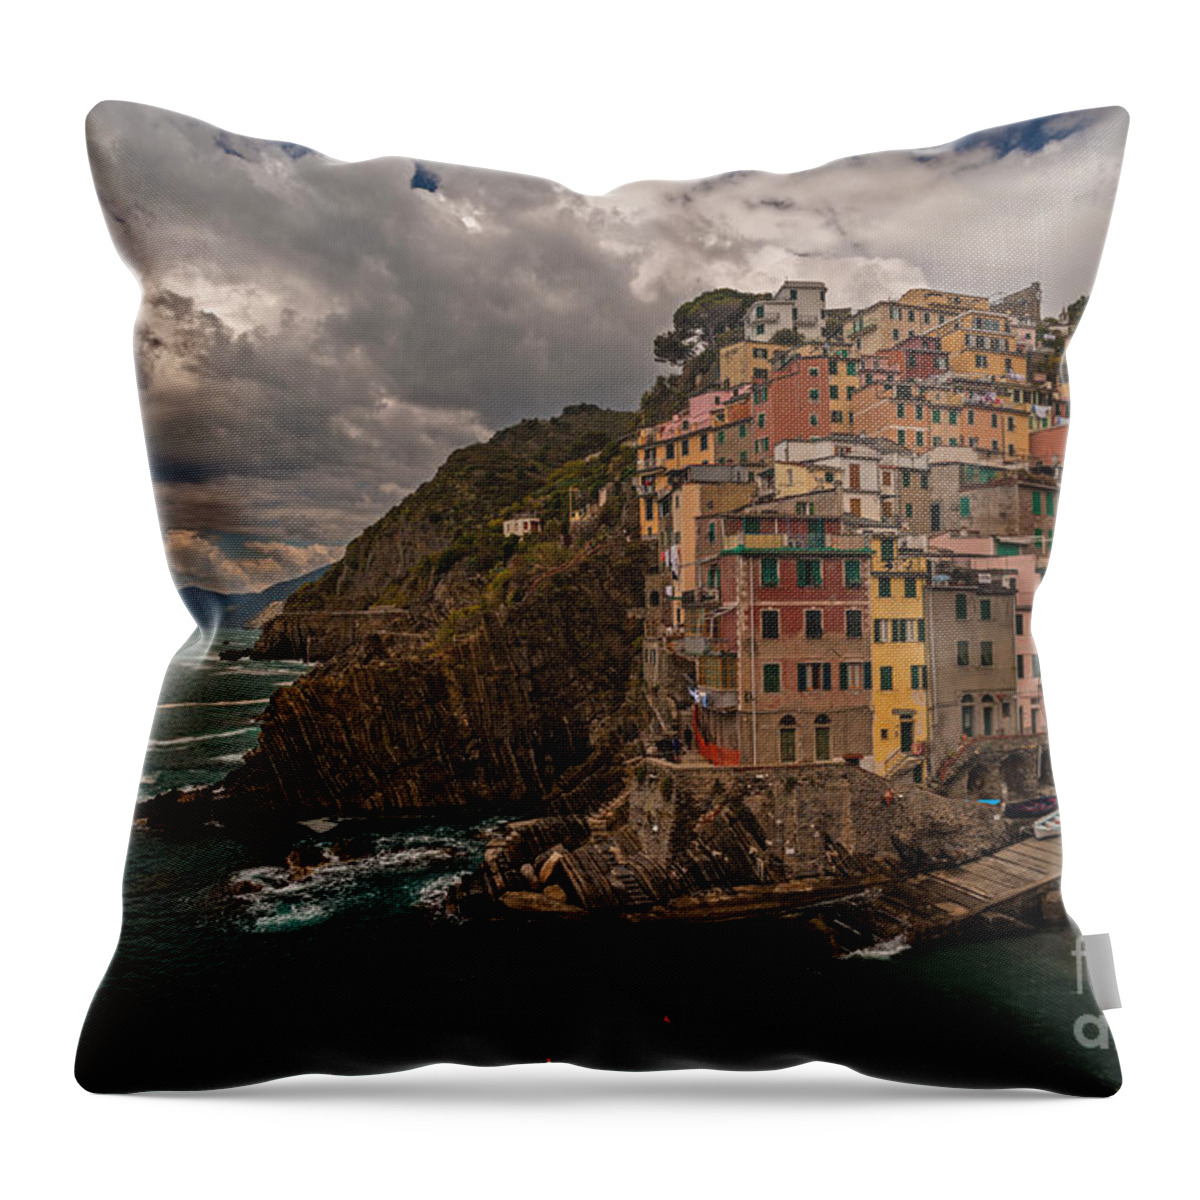 Cinque Terre Throw Pillow featuring the photograph Cinque Terre Riomaggiore by Mike Reid